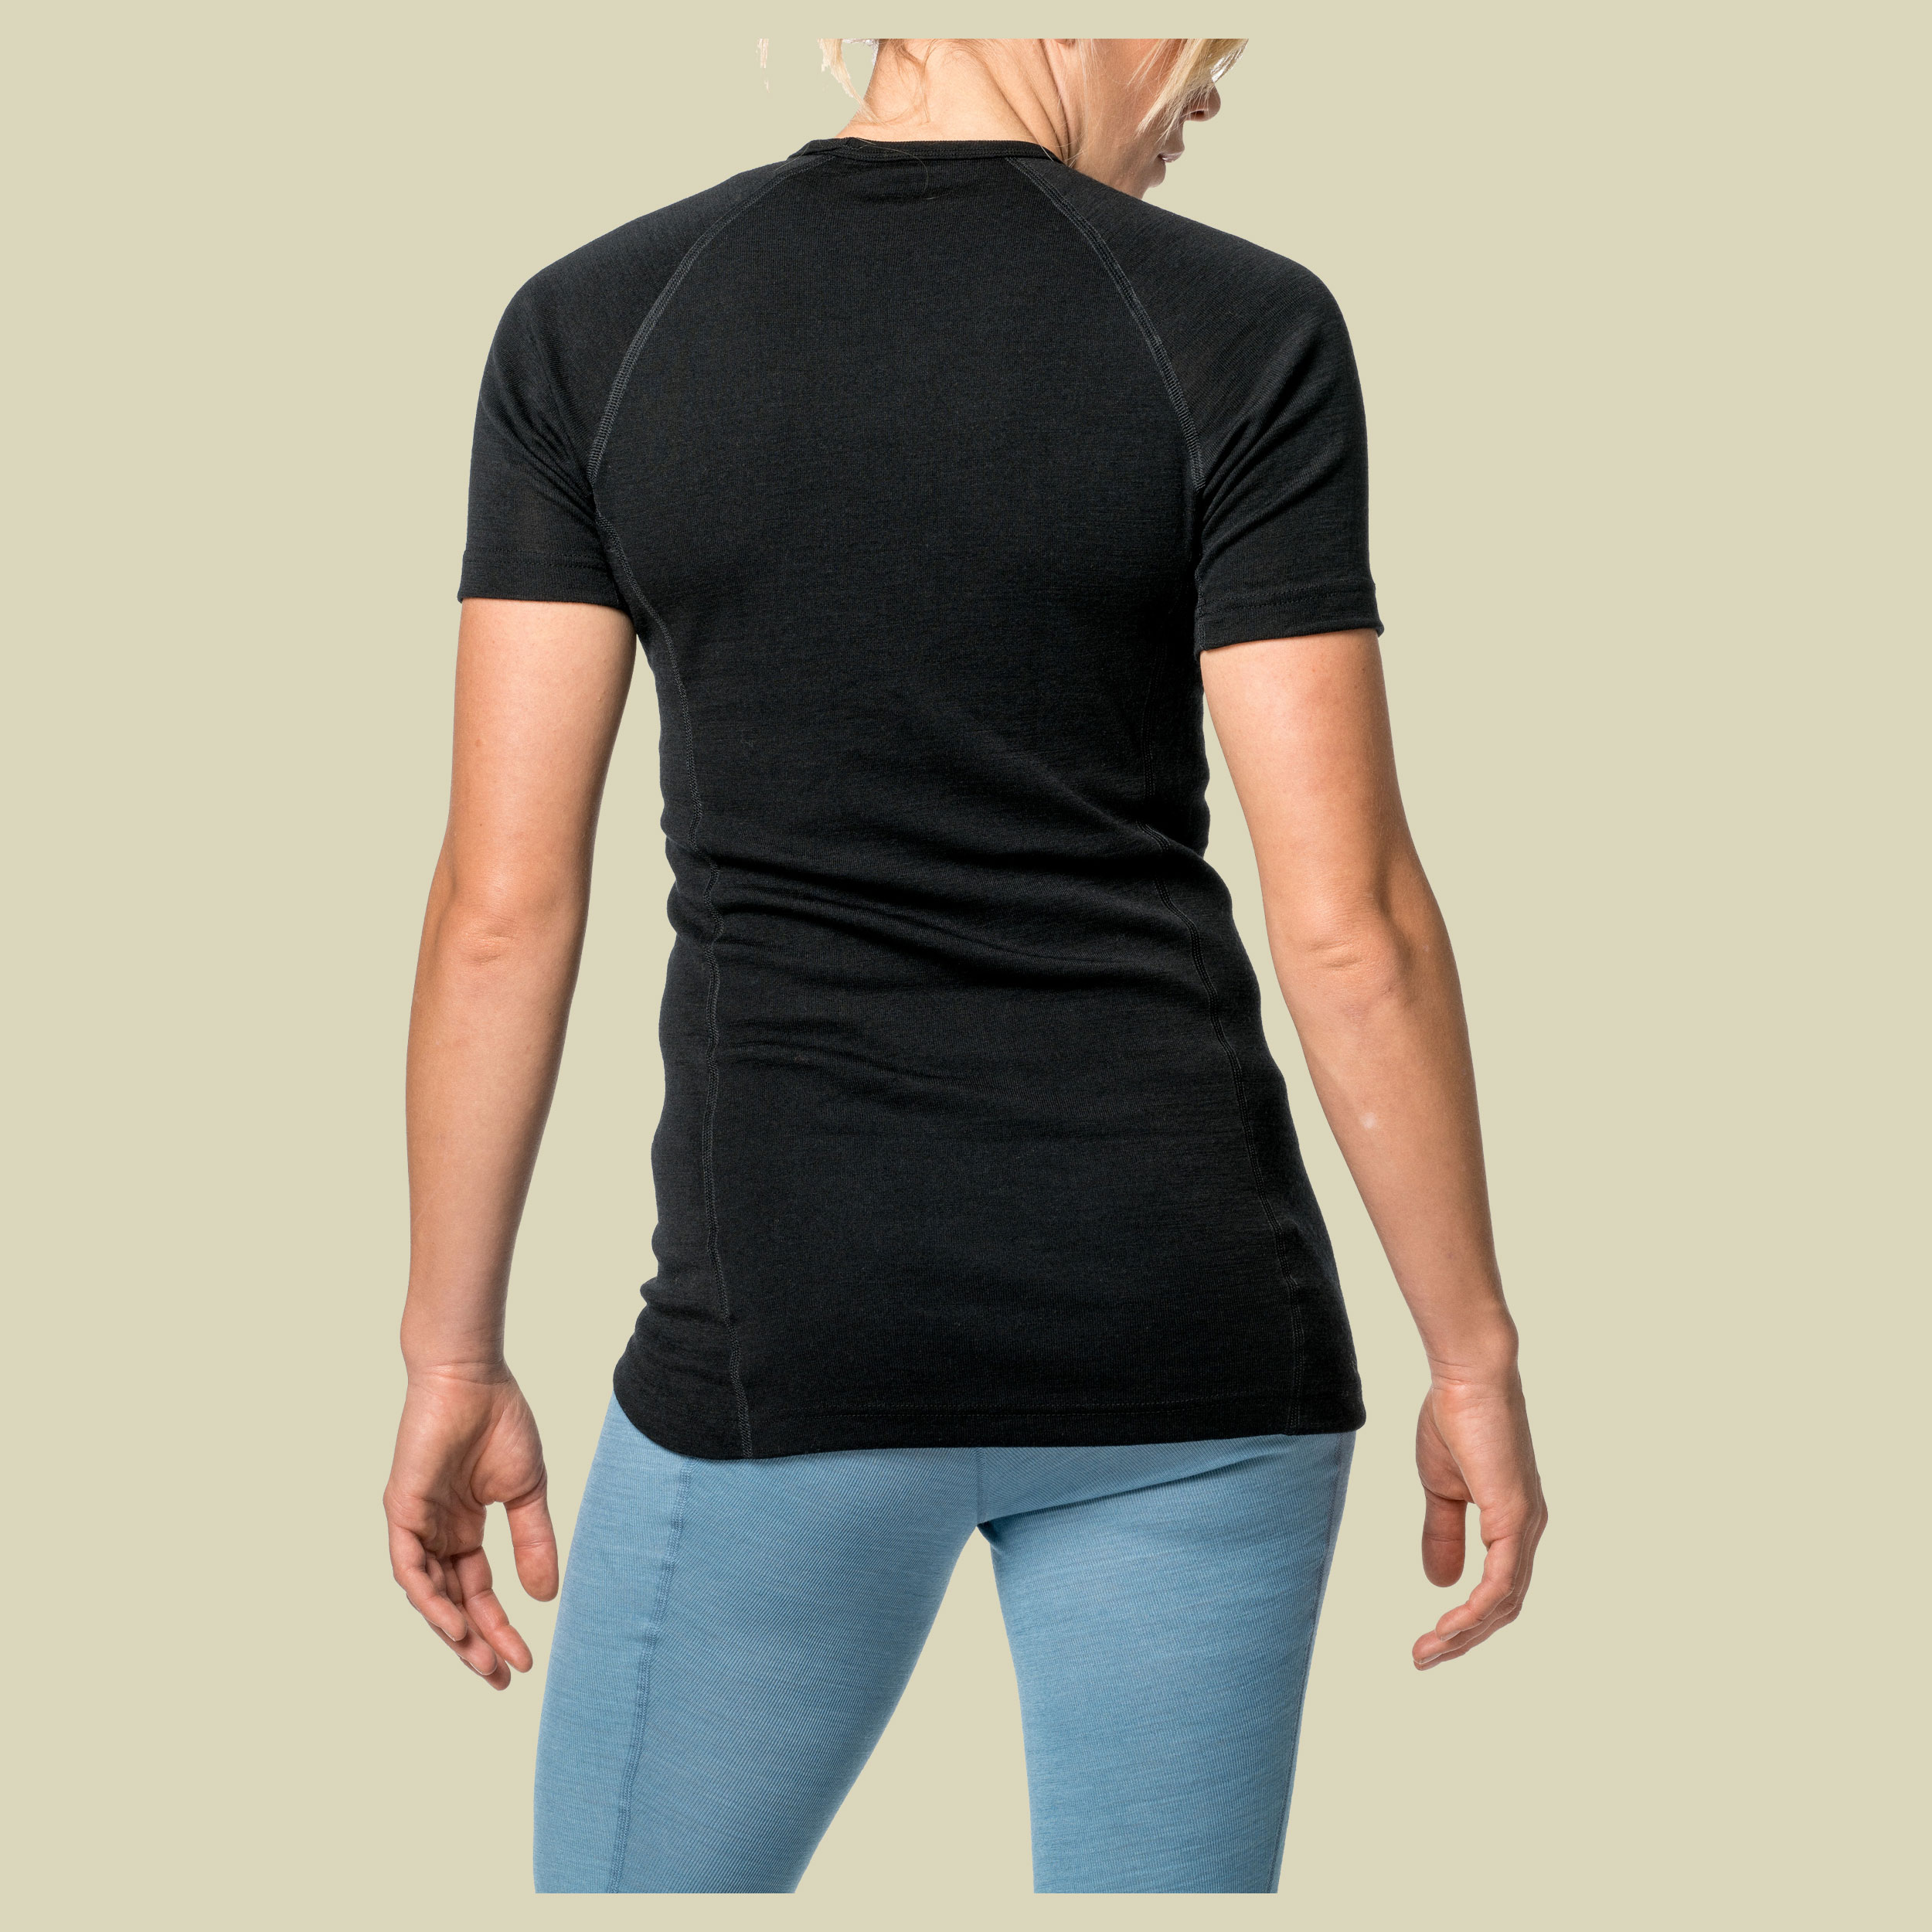 Lite T-Shirt M schwarz - Farbe black